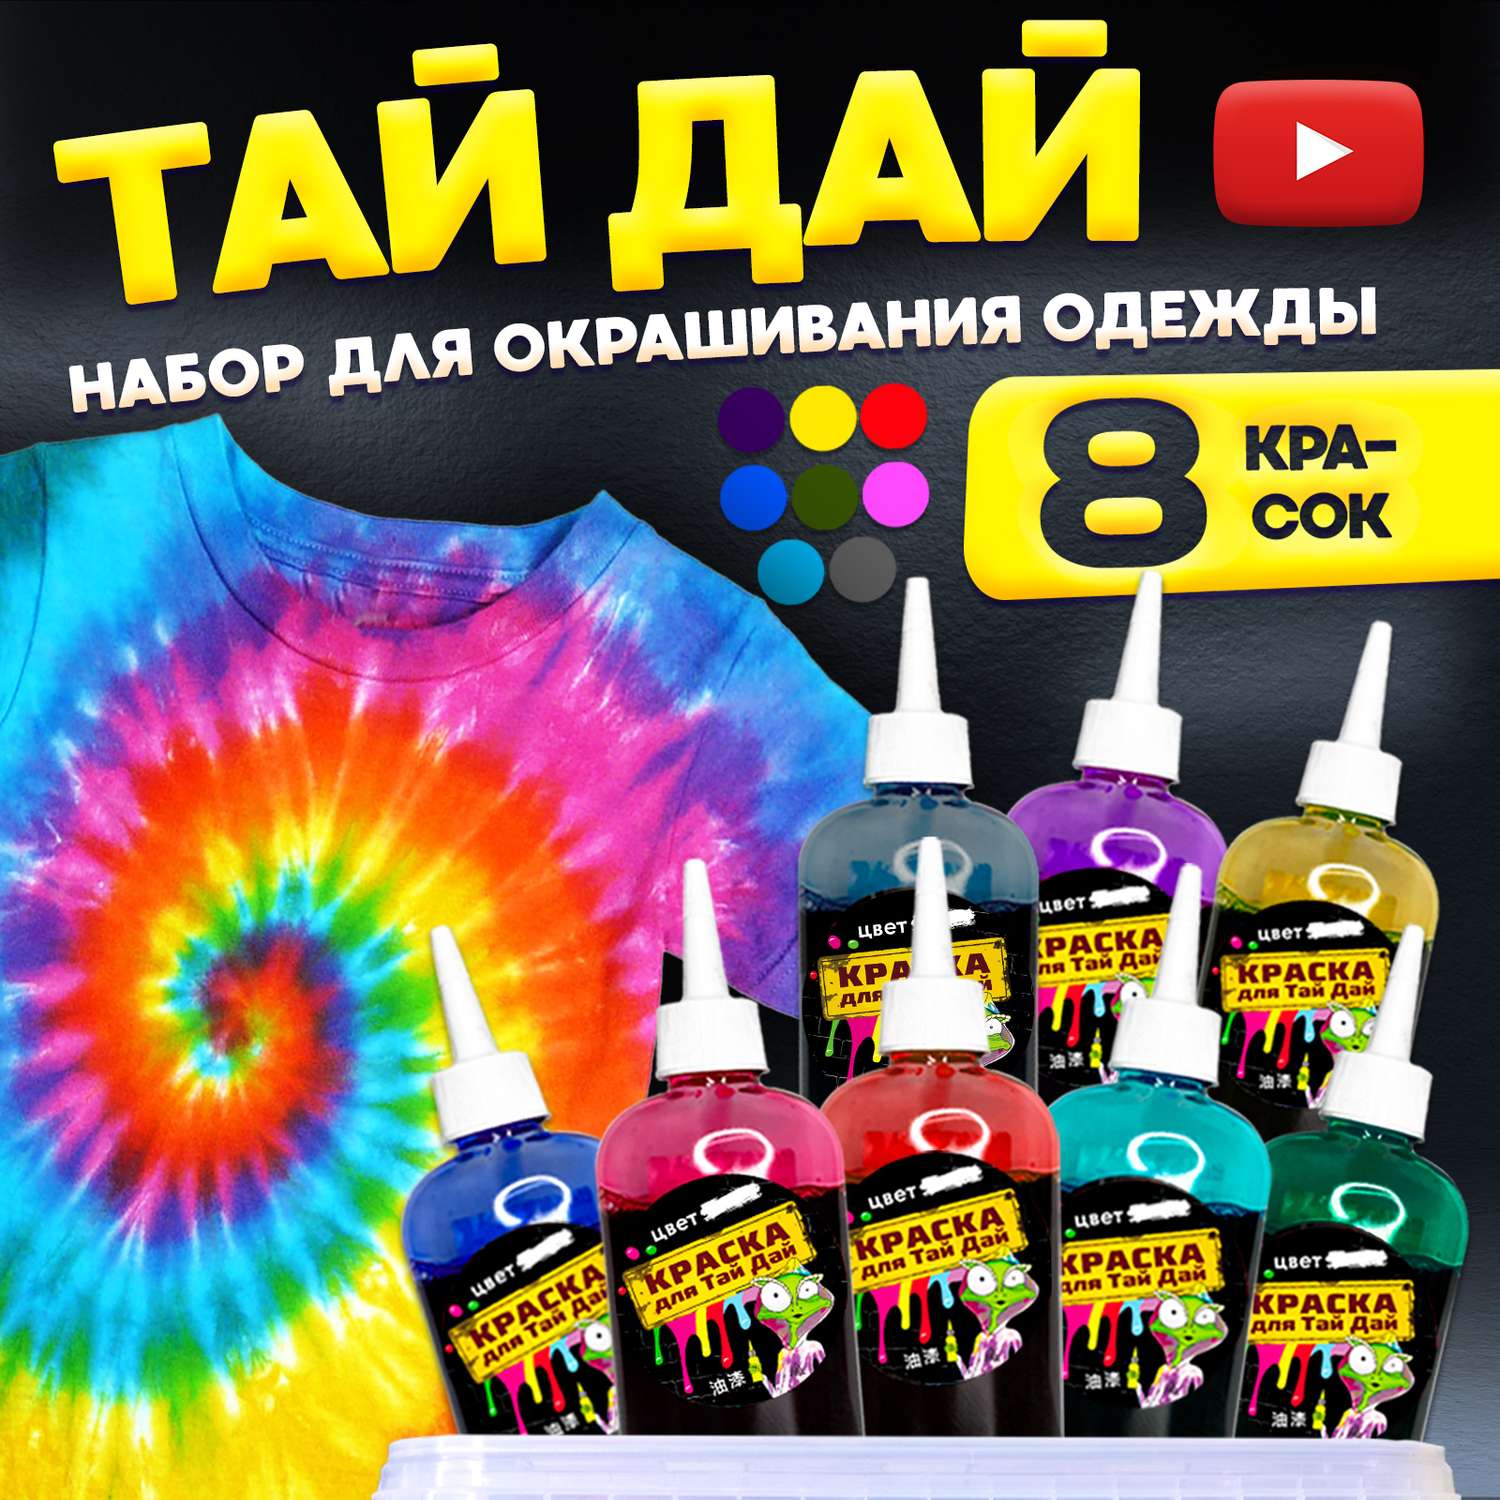 Набор для рисования MINI-TOYS окрашивание одежды ТАЙ ДАЙ Maxi BOX 3.3 краски для ткани 8 цветов - фото 1